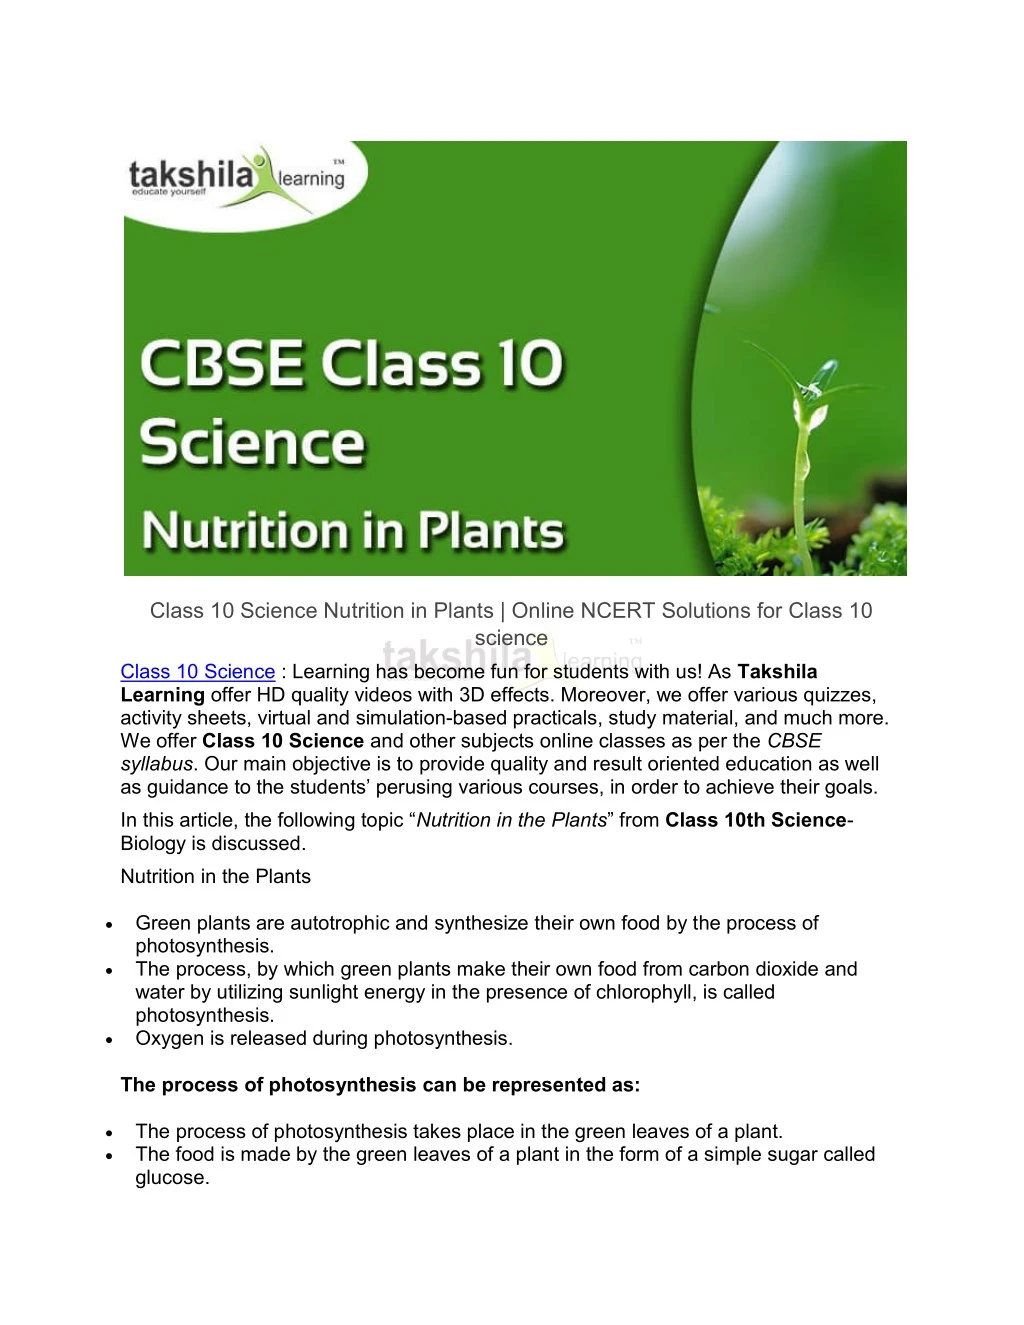 class 10 science nutrition in plants online ncert